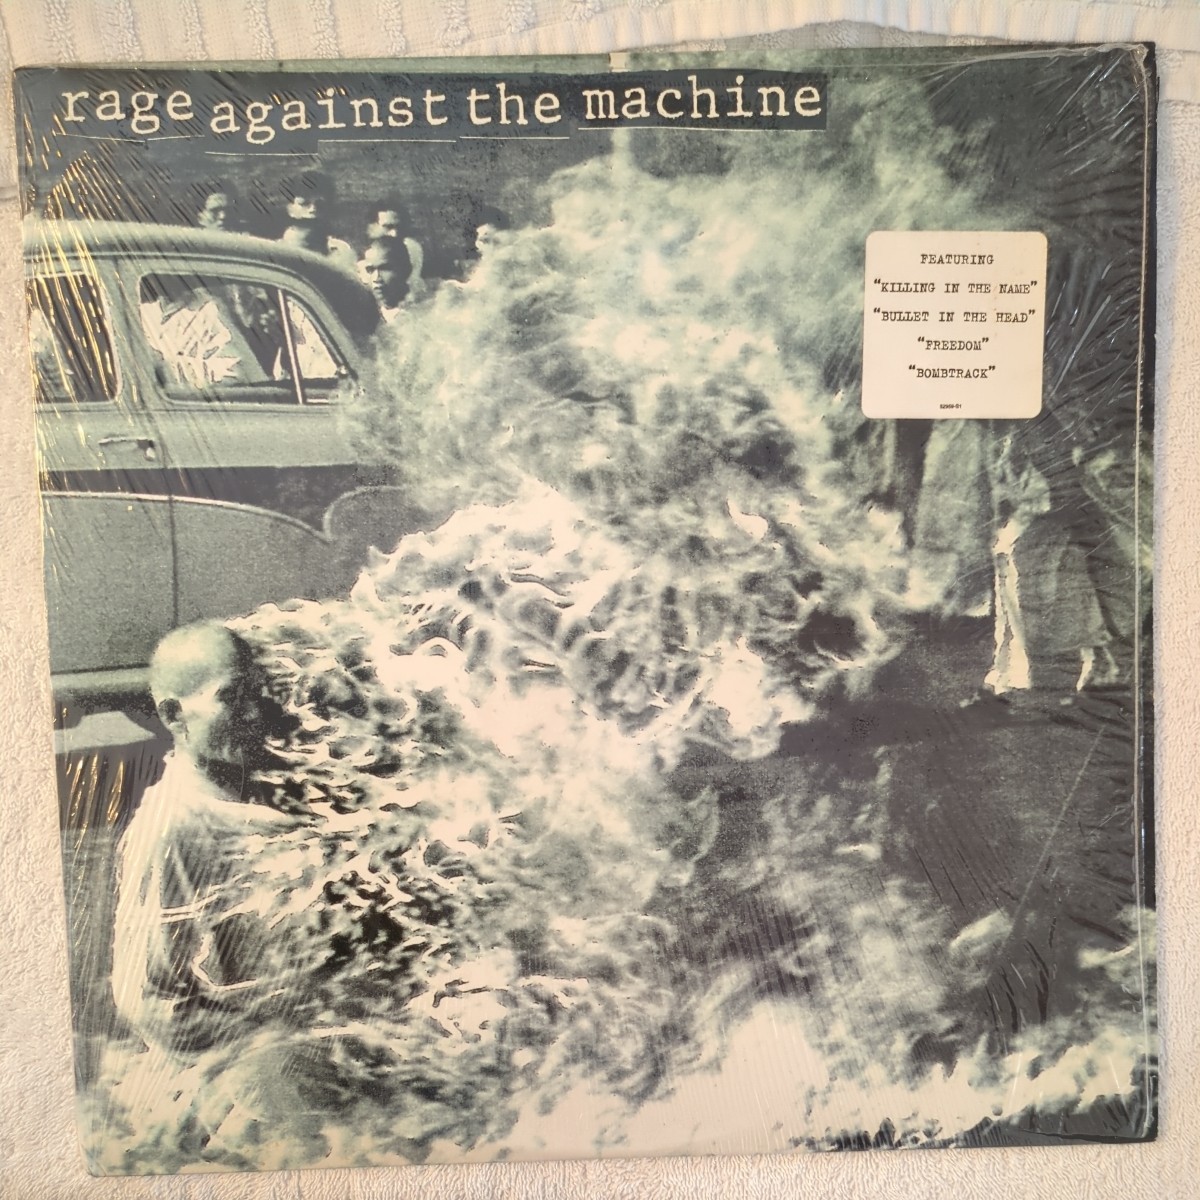 Yahoo!オークション -「rage against the machine レコード」の落札 